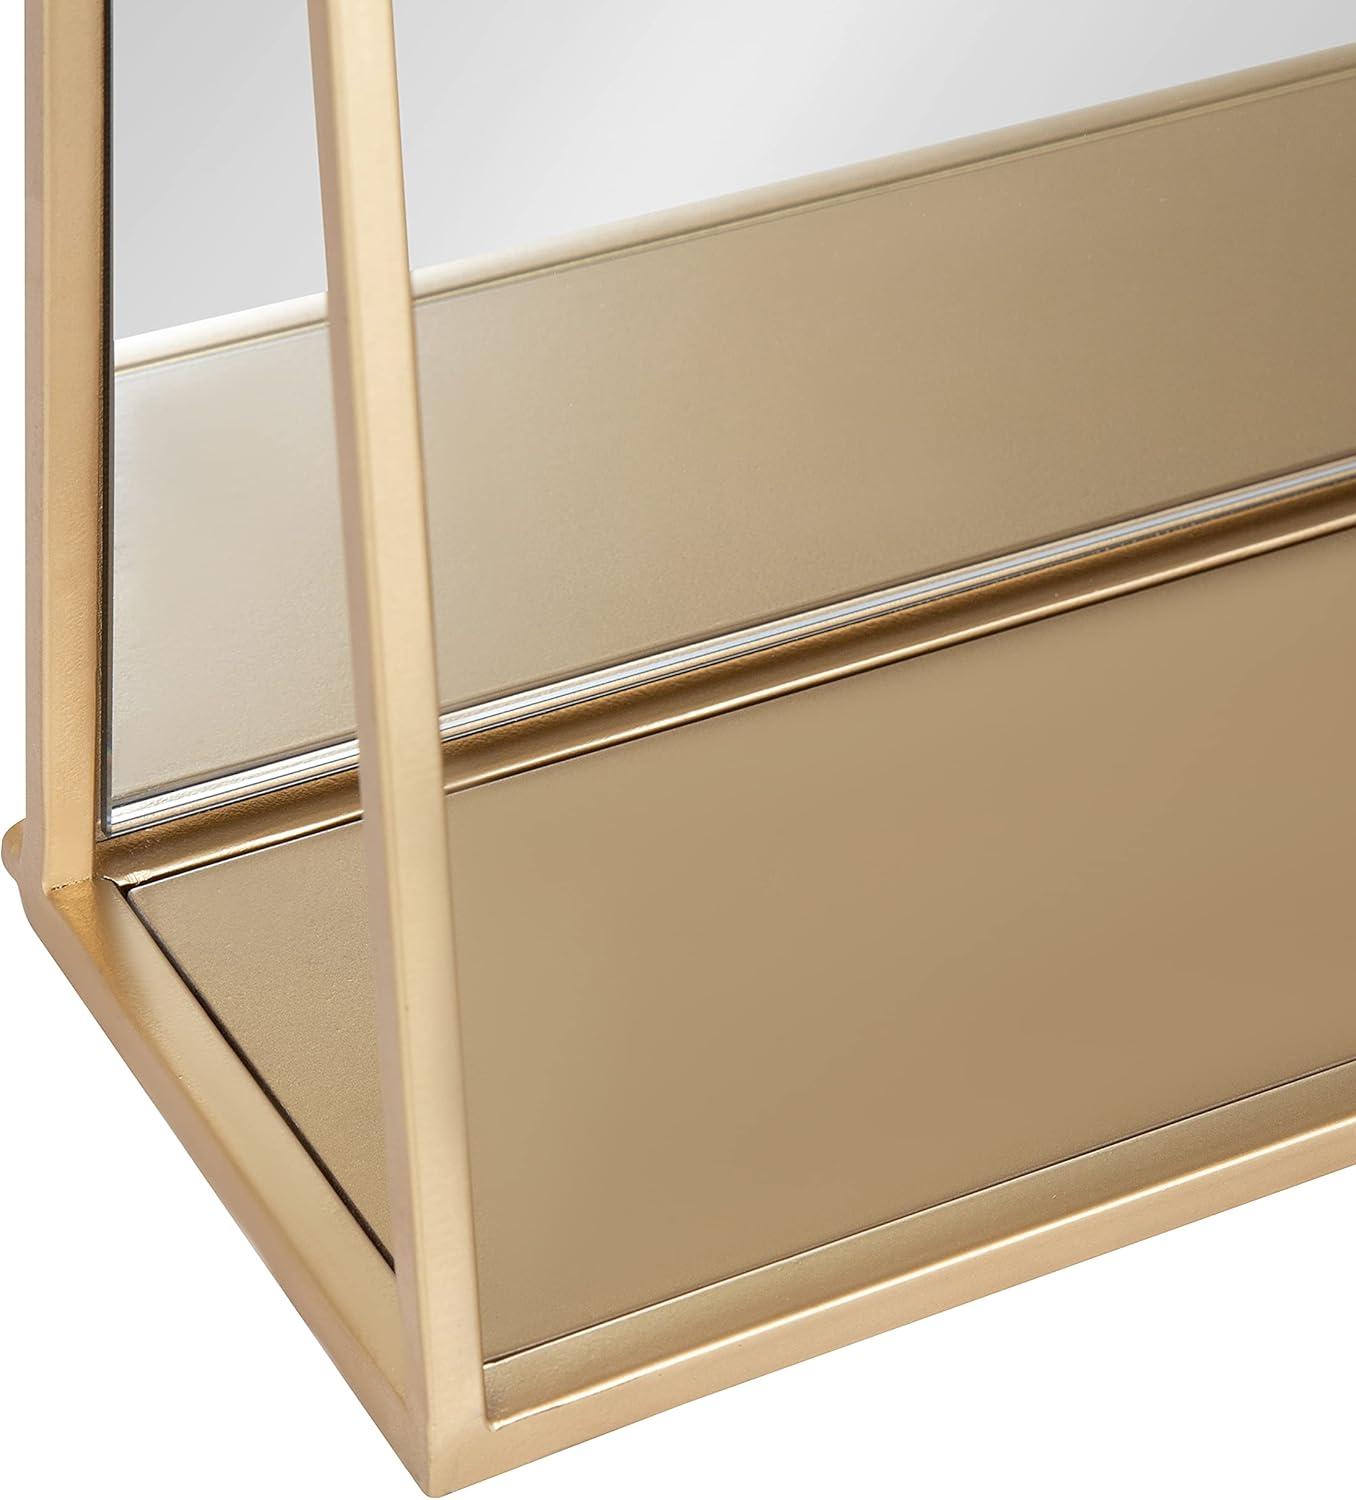 Lintz 31.8" Gold Metal Framed Vanity Wall Mirror with Shelf